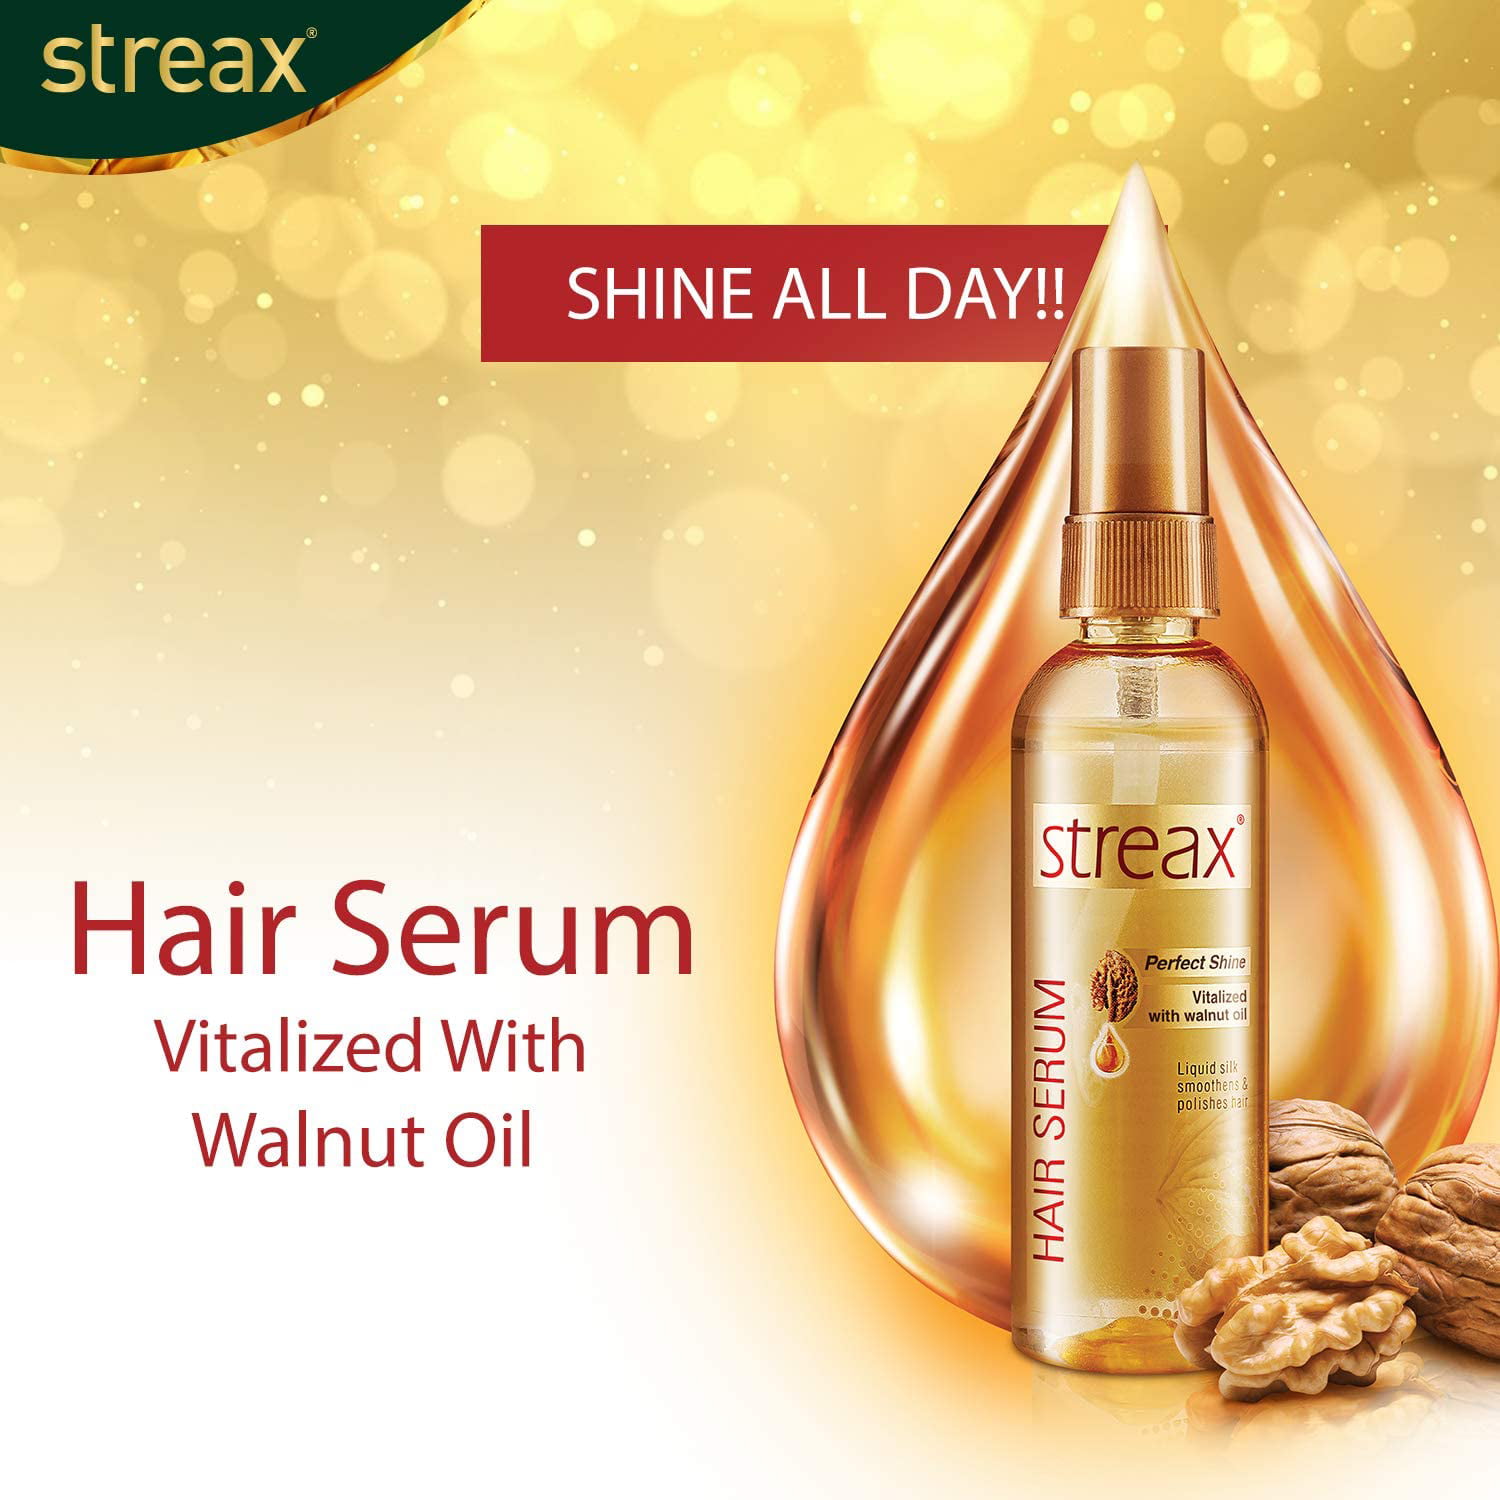 StreaxIndia - With the Streax Walnut hair serum, get... | Facebook